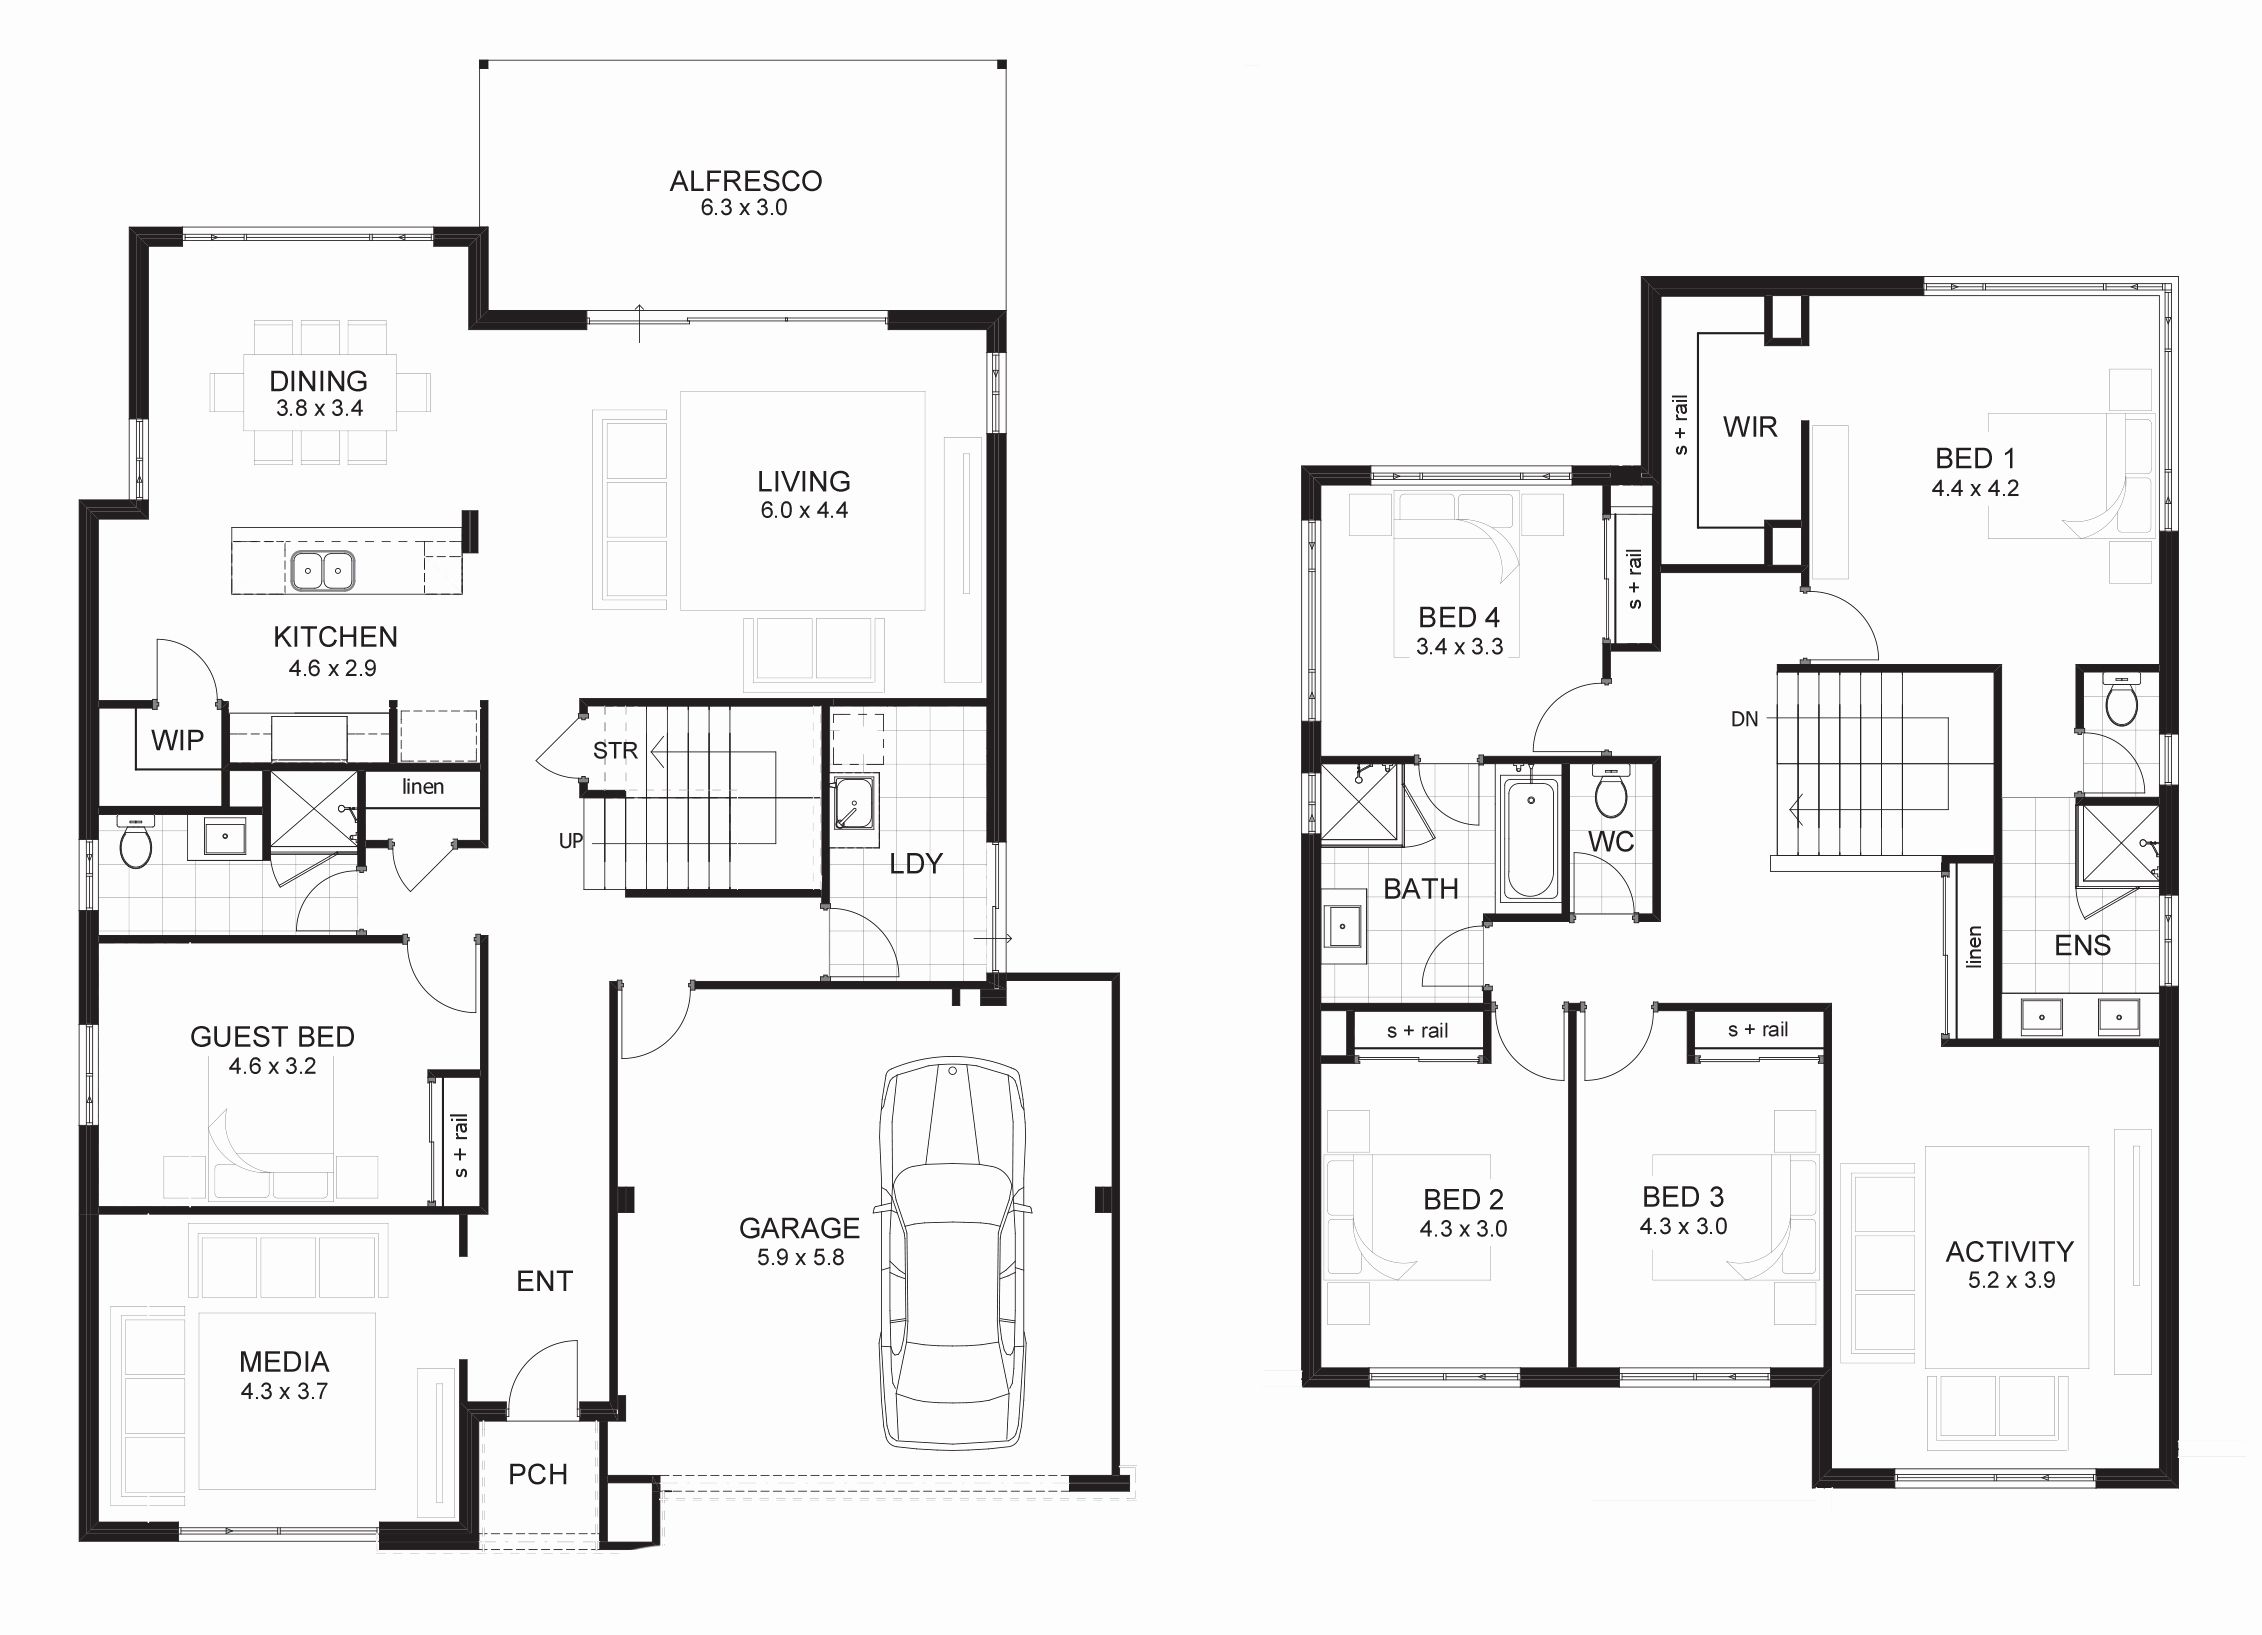 2 Storey House Floor Plan Dwg Inspirational Residential